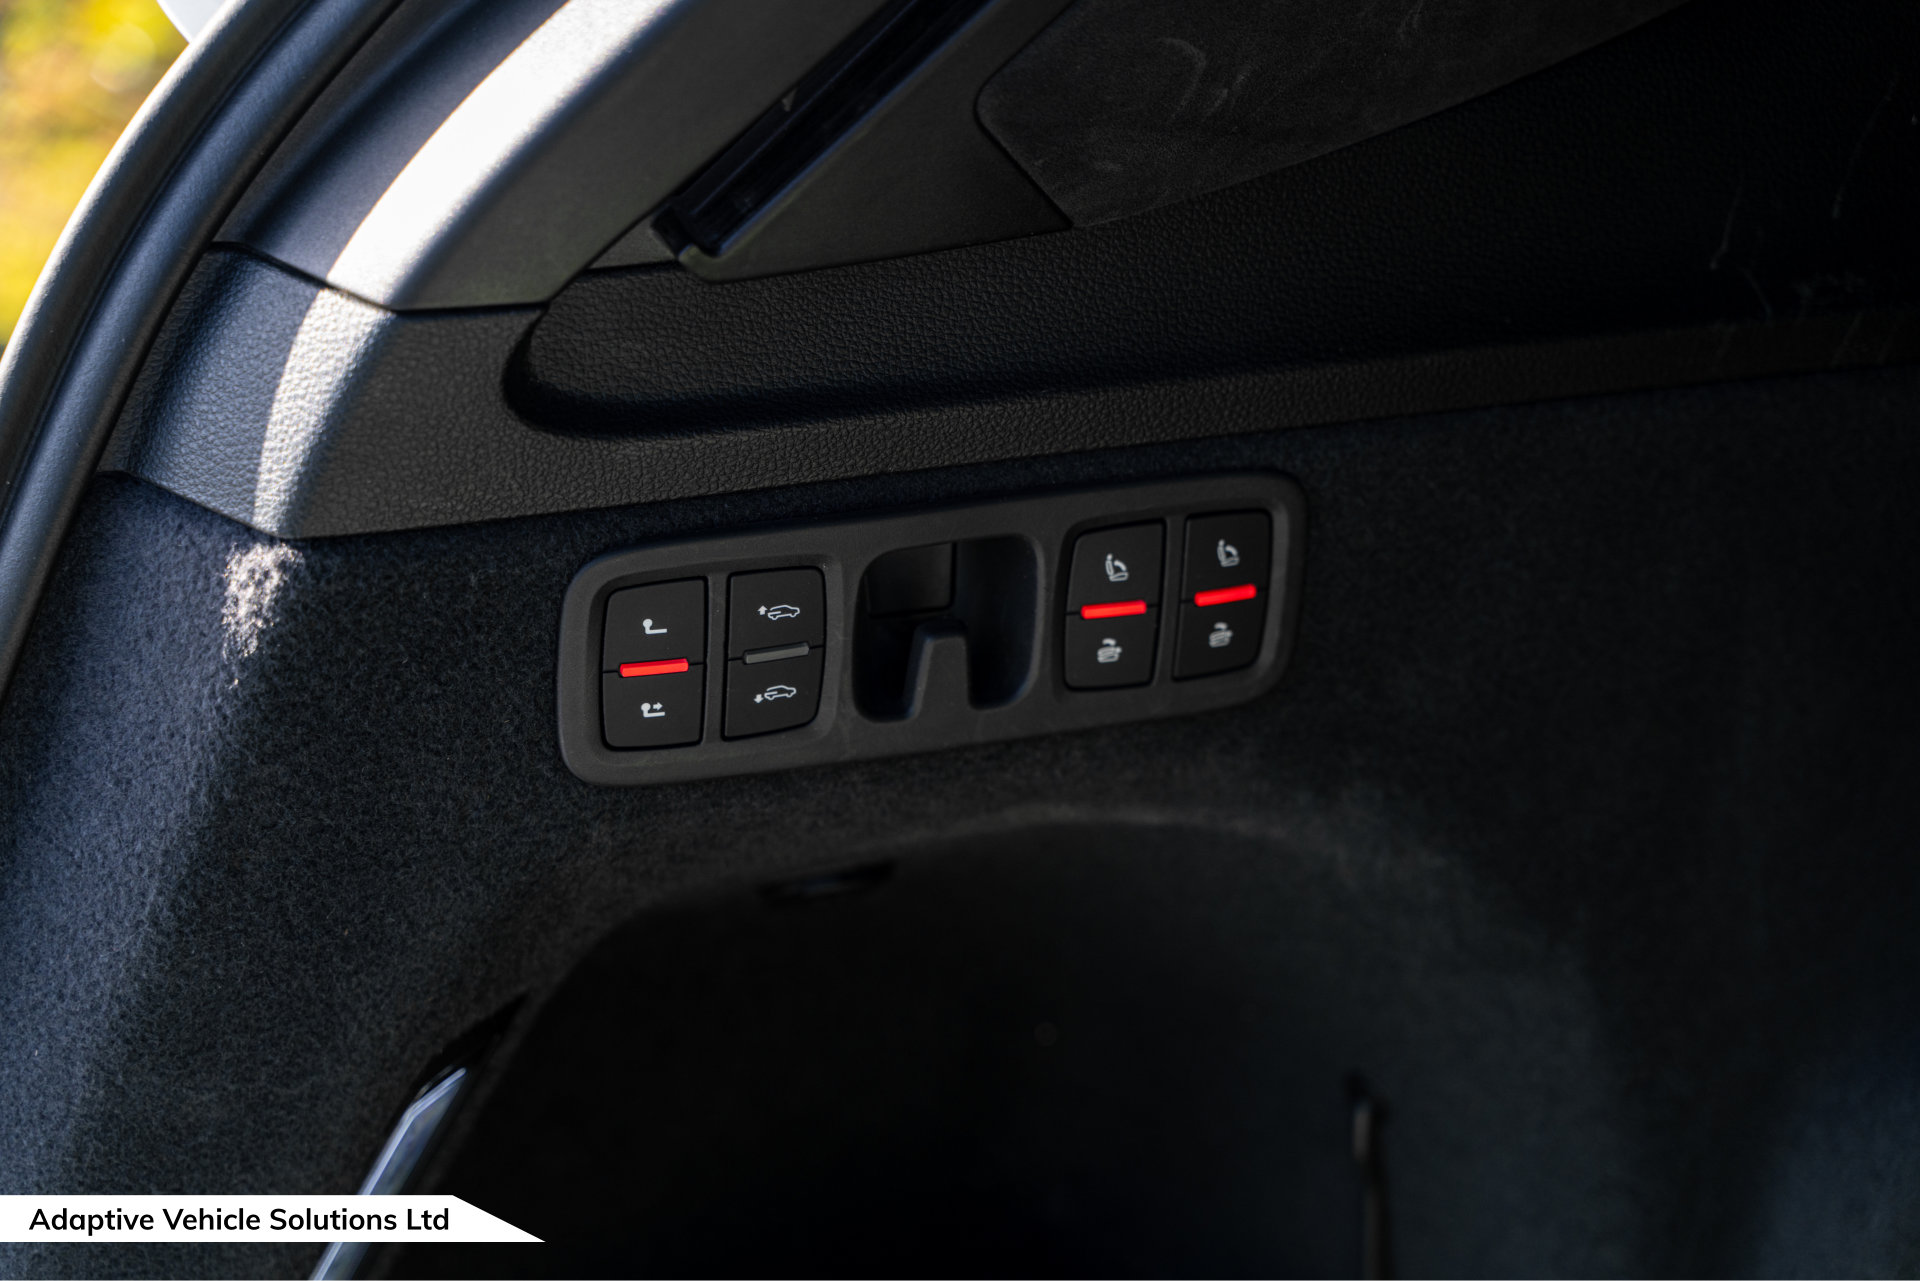 2019 Audi Q7 Vorsprung White rear controls